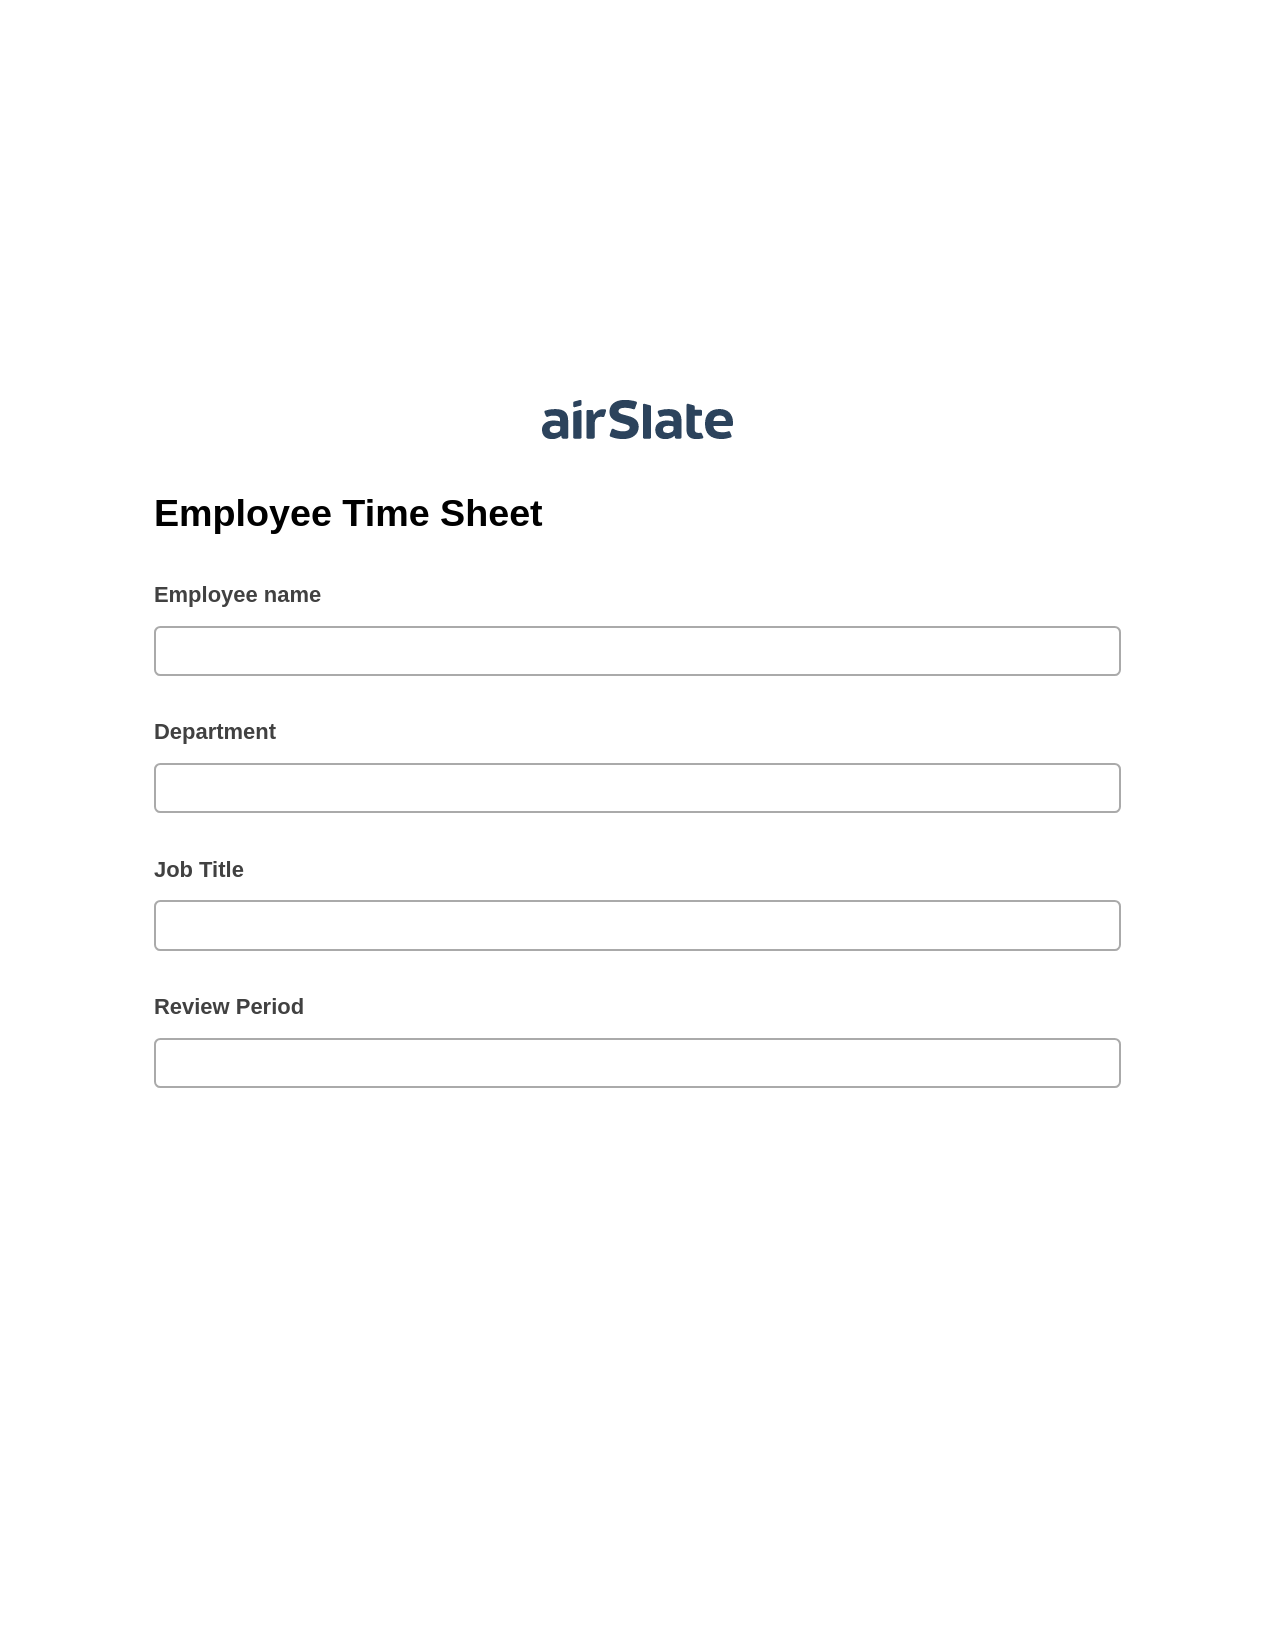 Employee Time Sheet Pre-fill from Salesforce Records Bot, Create Salesforce Records Bot, Archive to Google Drive Bot